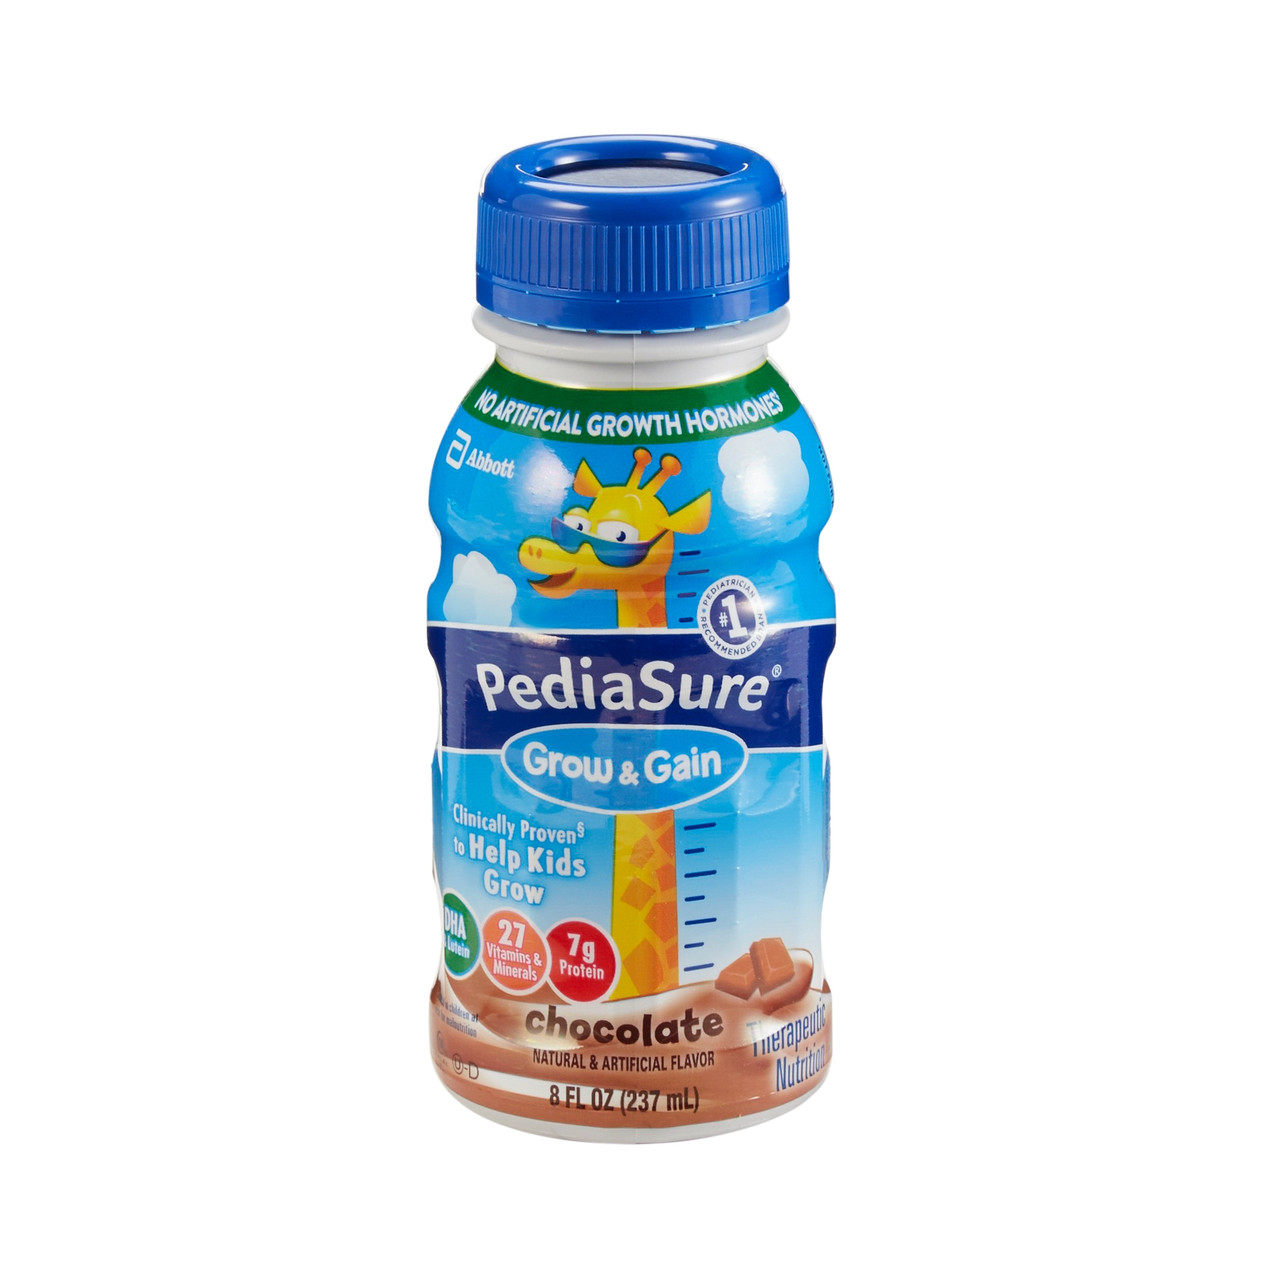 PediaSure Grow & Gain Pediatric Oral Supplement, Chocolate, 8 oz